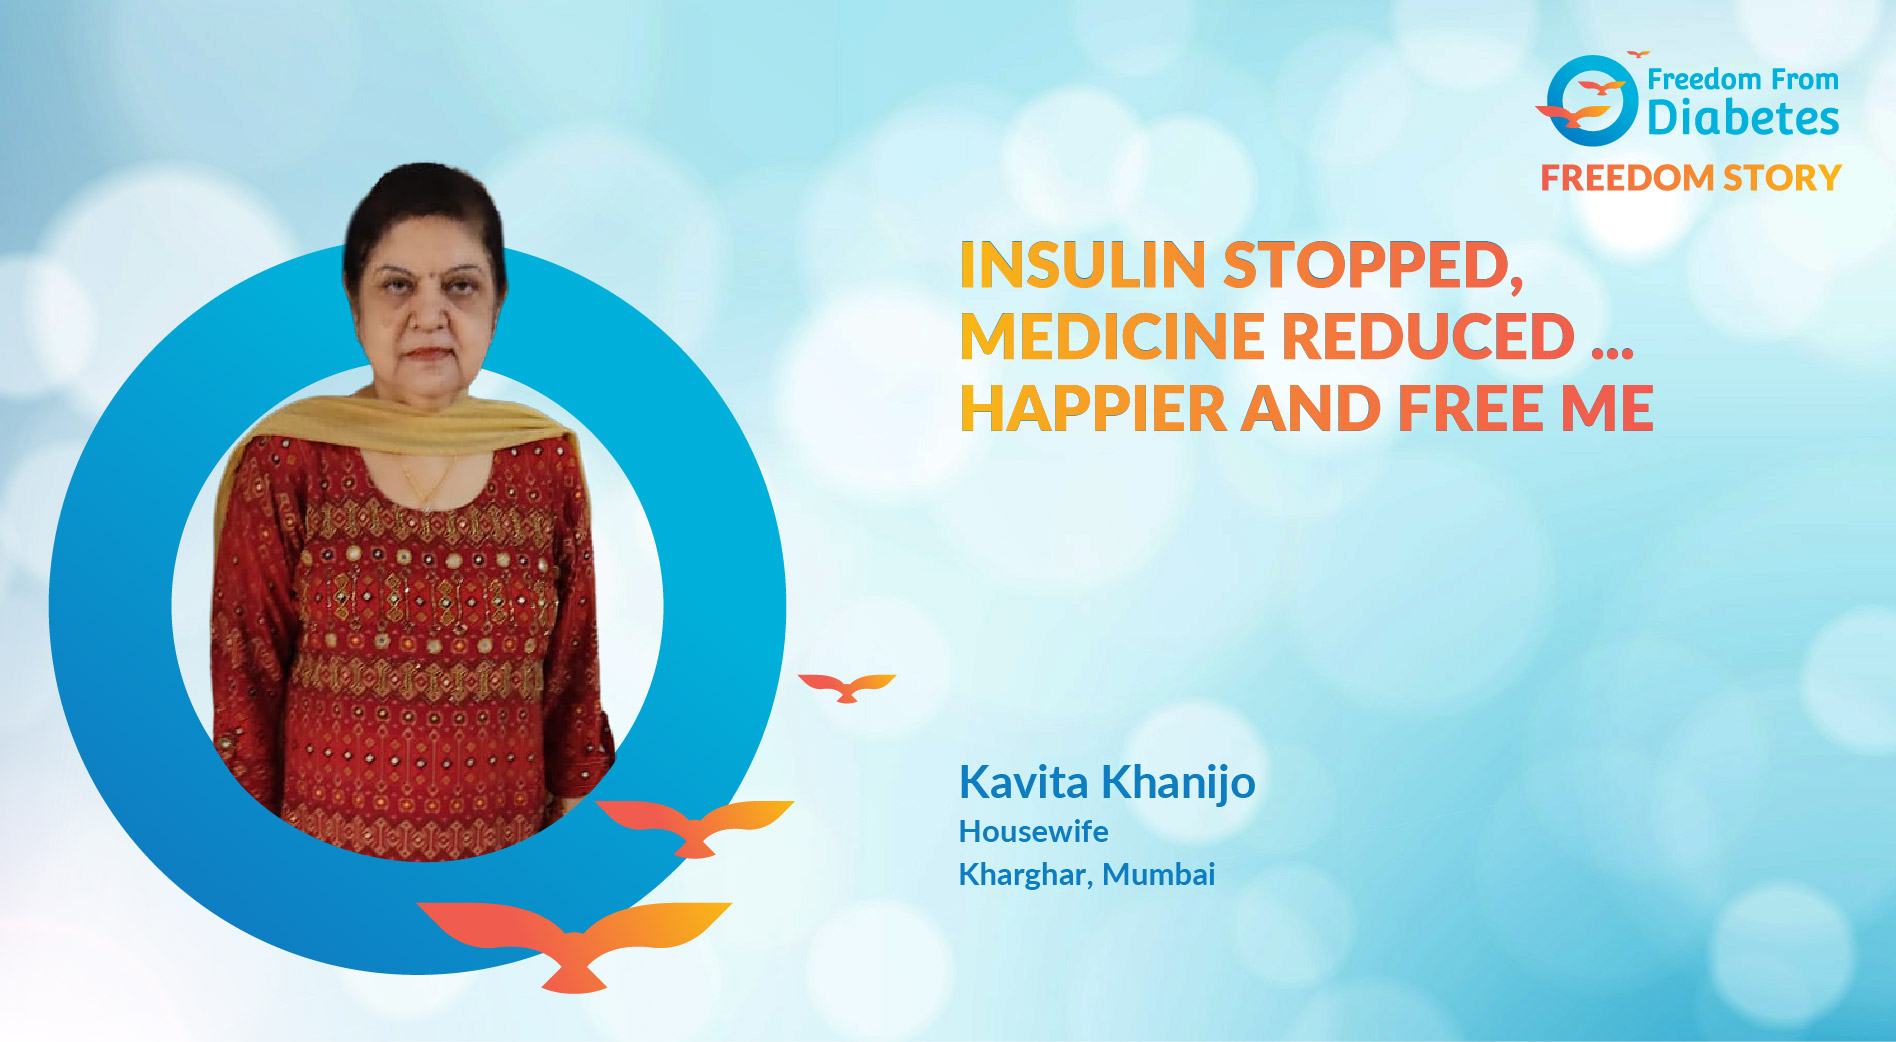 An incredible insulin reversal story from Mumbai